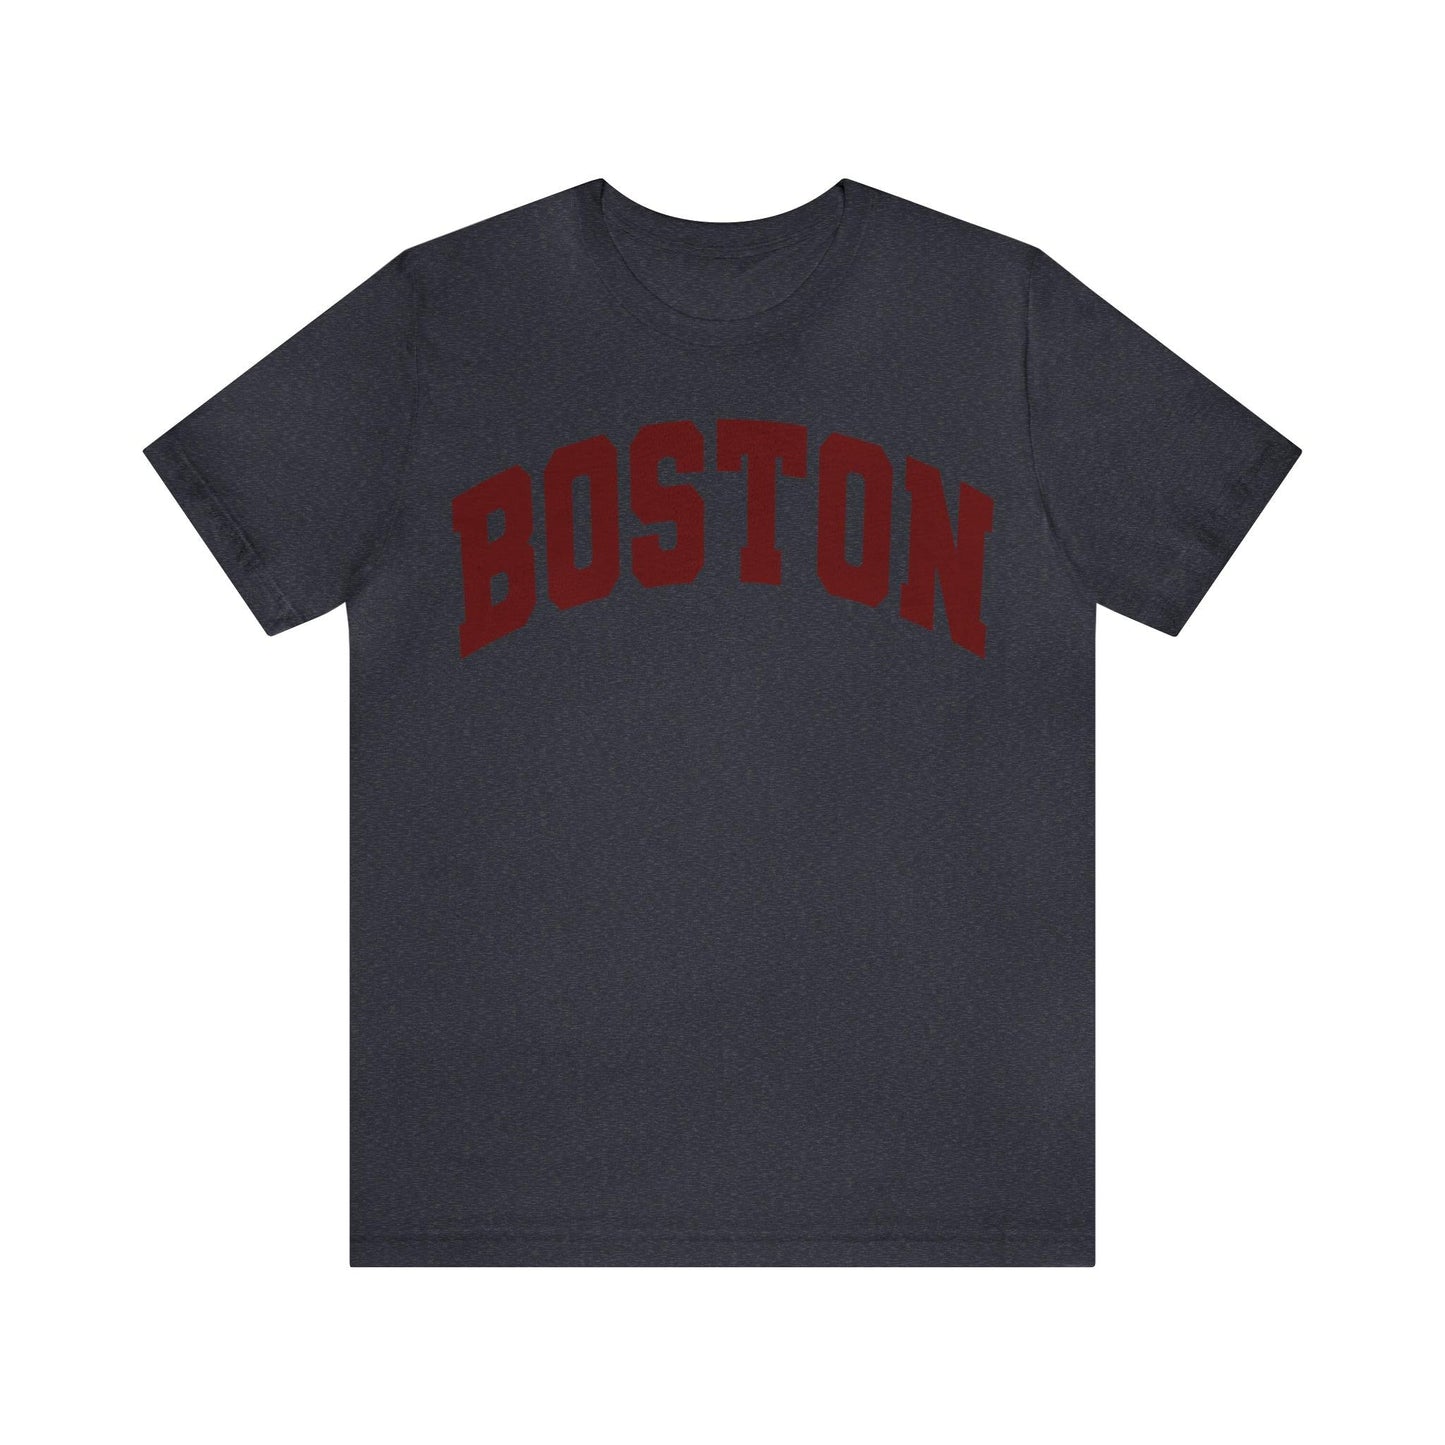 Boston Shirt Boston Souvenir Boston TShirt, Boston Gift Boston Massachusetts Shirt